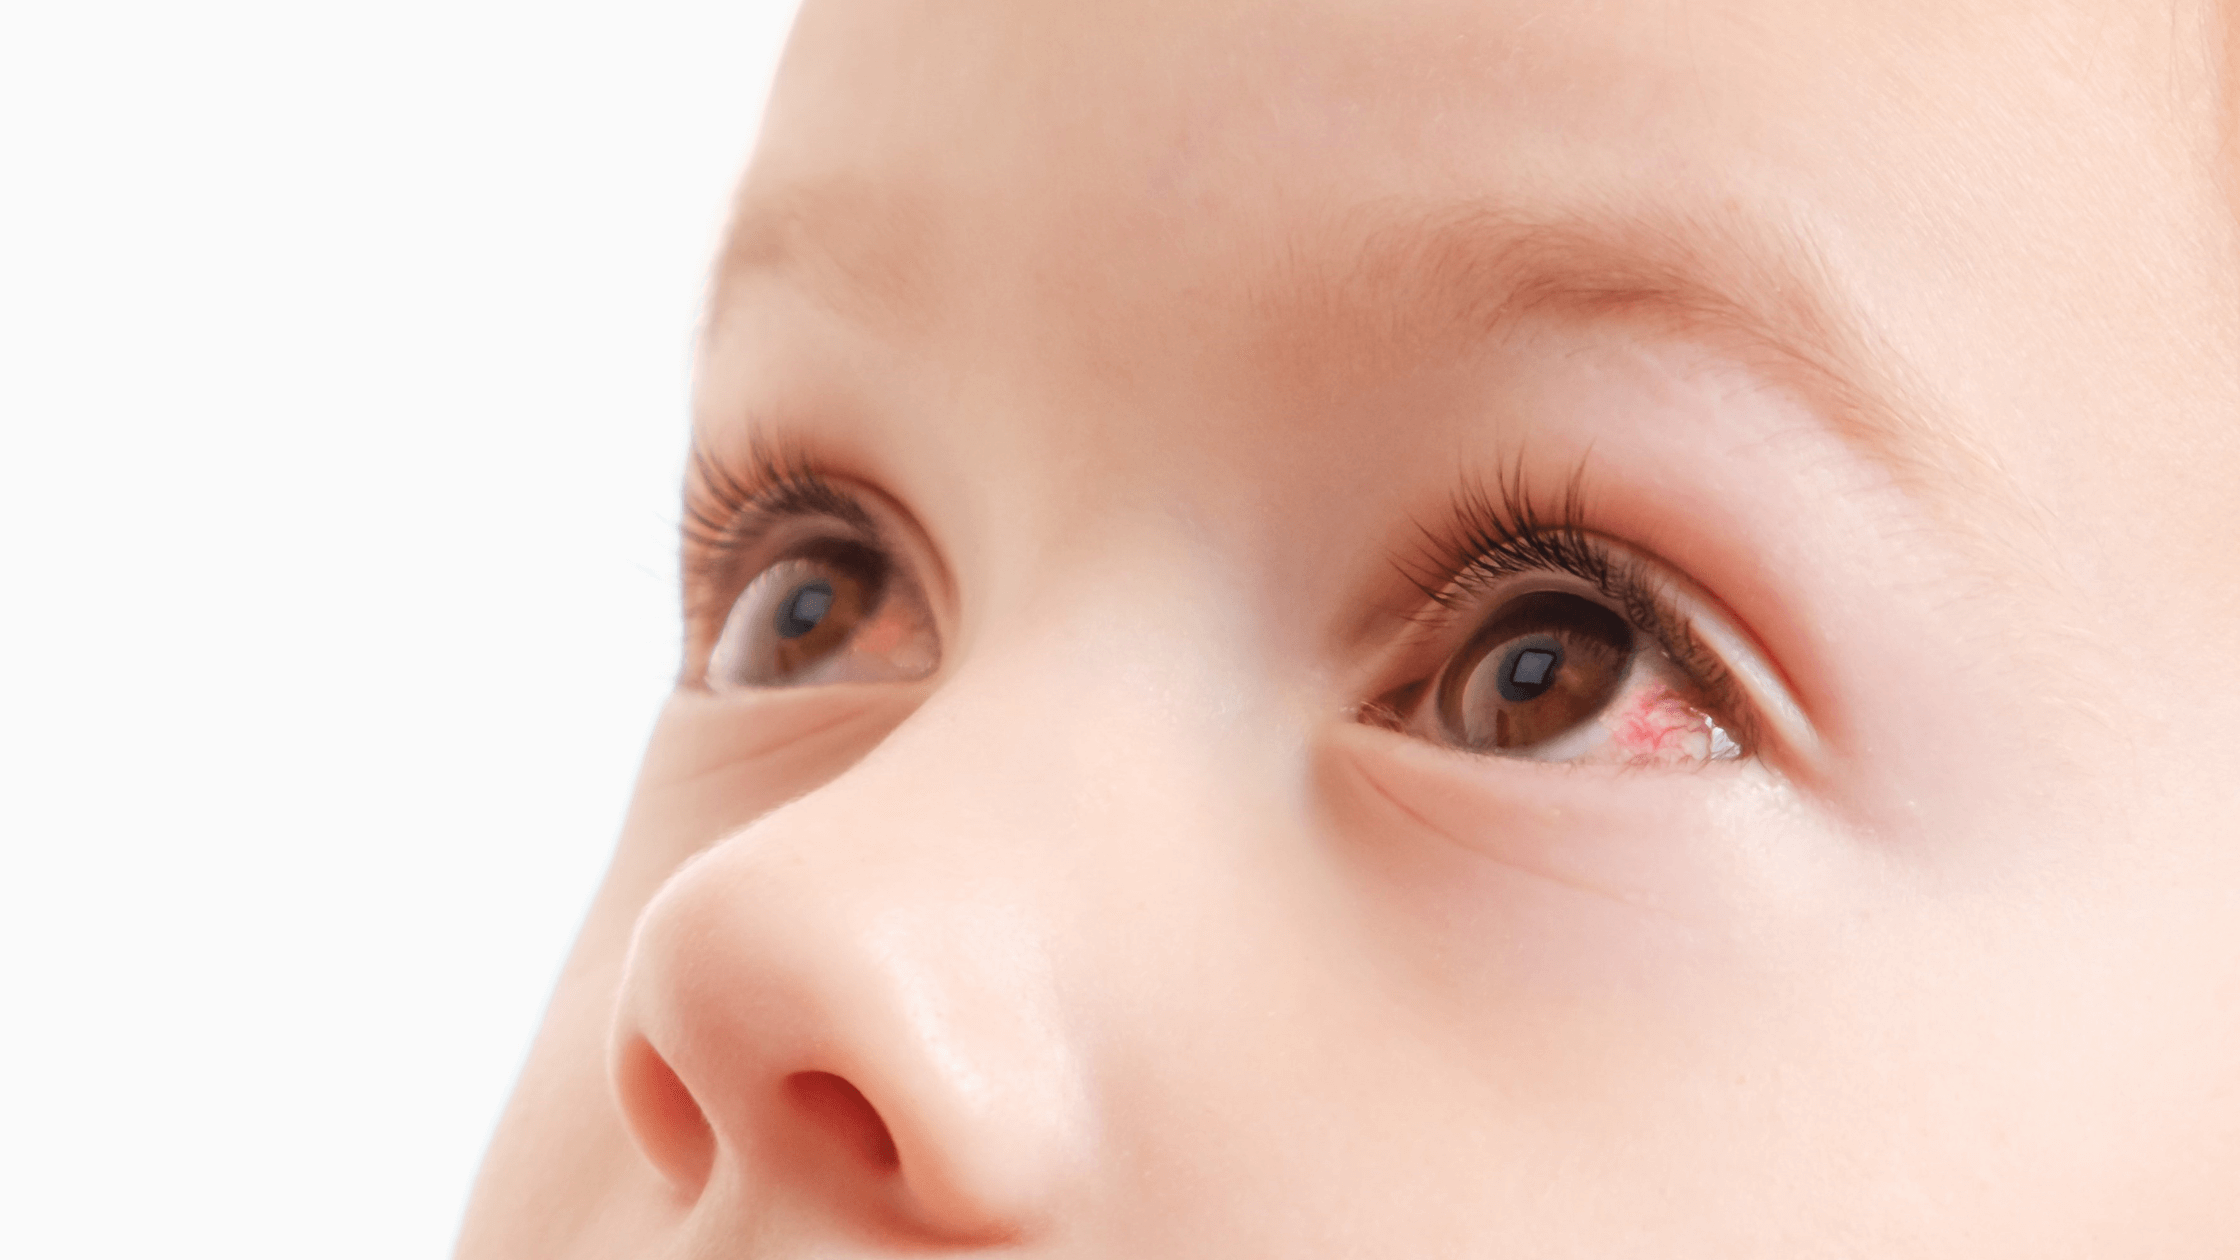 Eye exam, pediatric eye exams